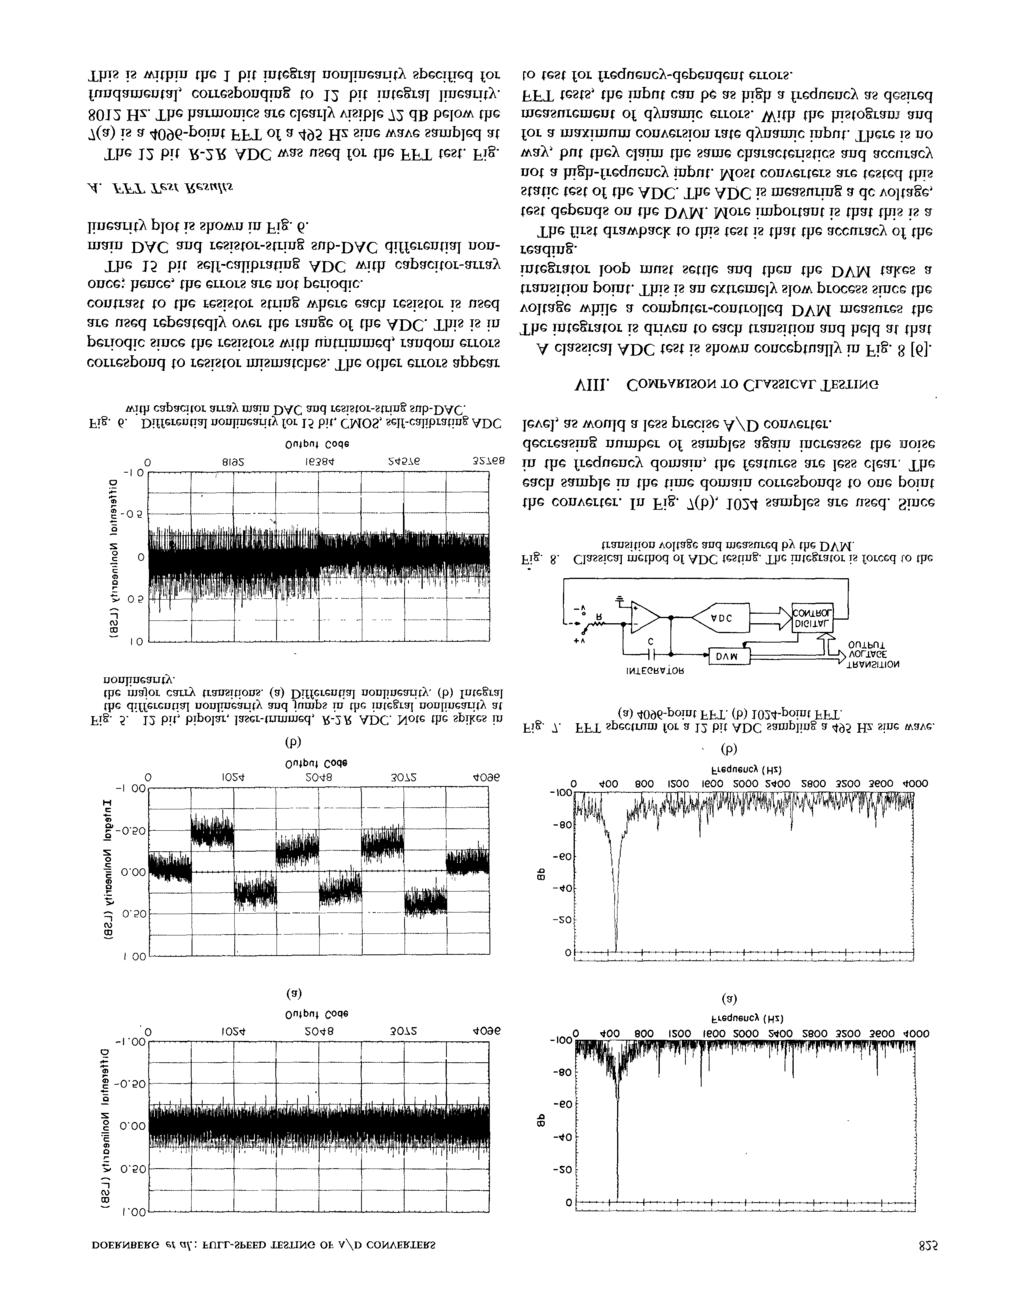 DOERNBERG e al.: FULL-SPEED TESTNG OF A/D CONVERTERS 825-20 m w -40-60 ~- 0.50 G : 6-1.